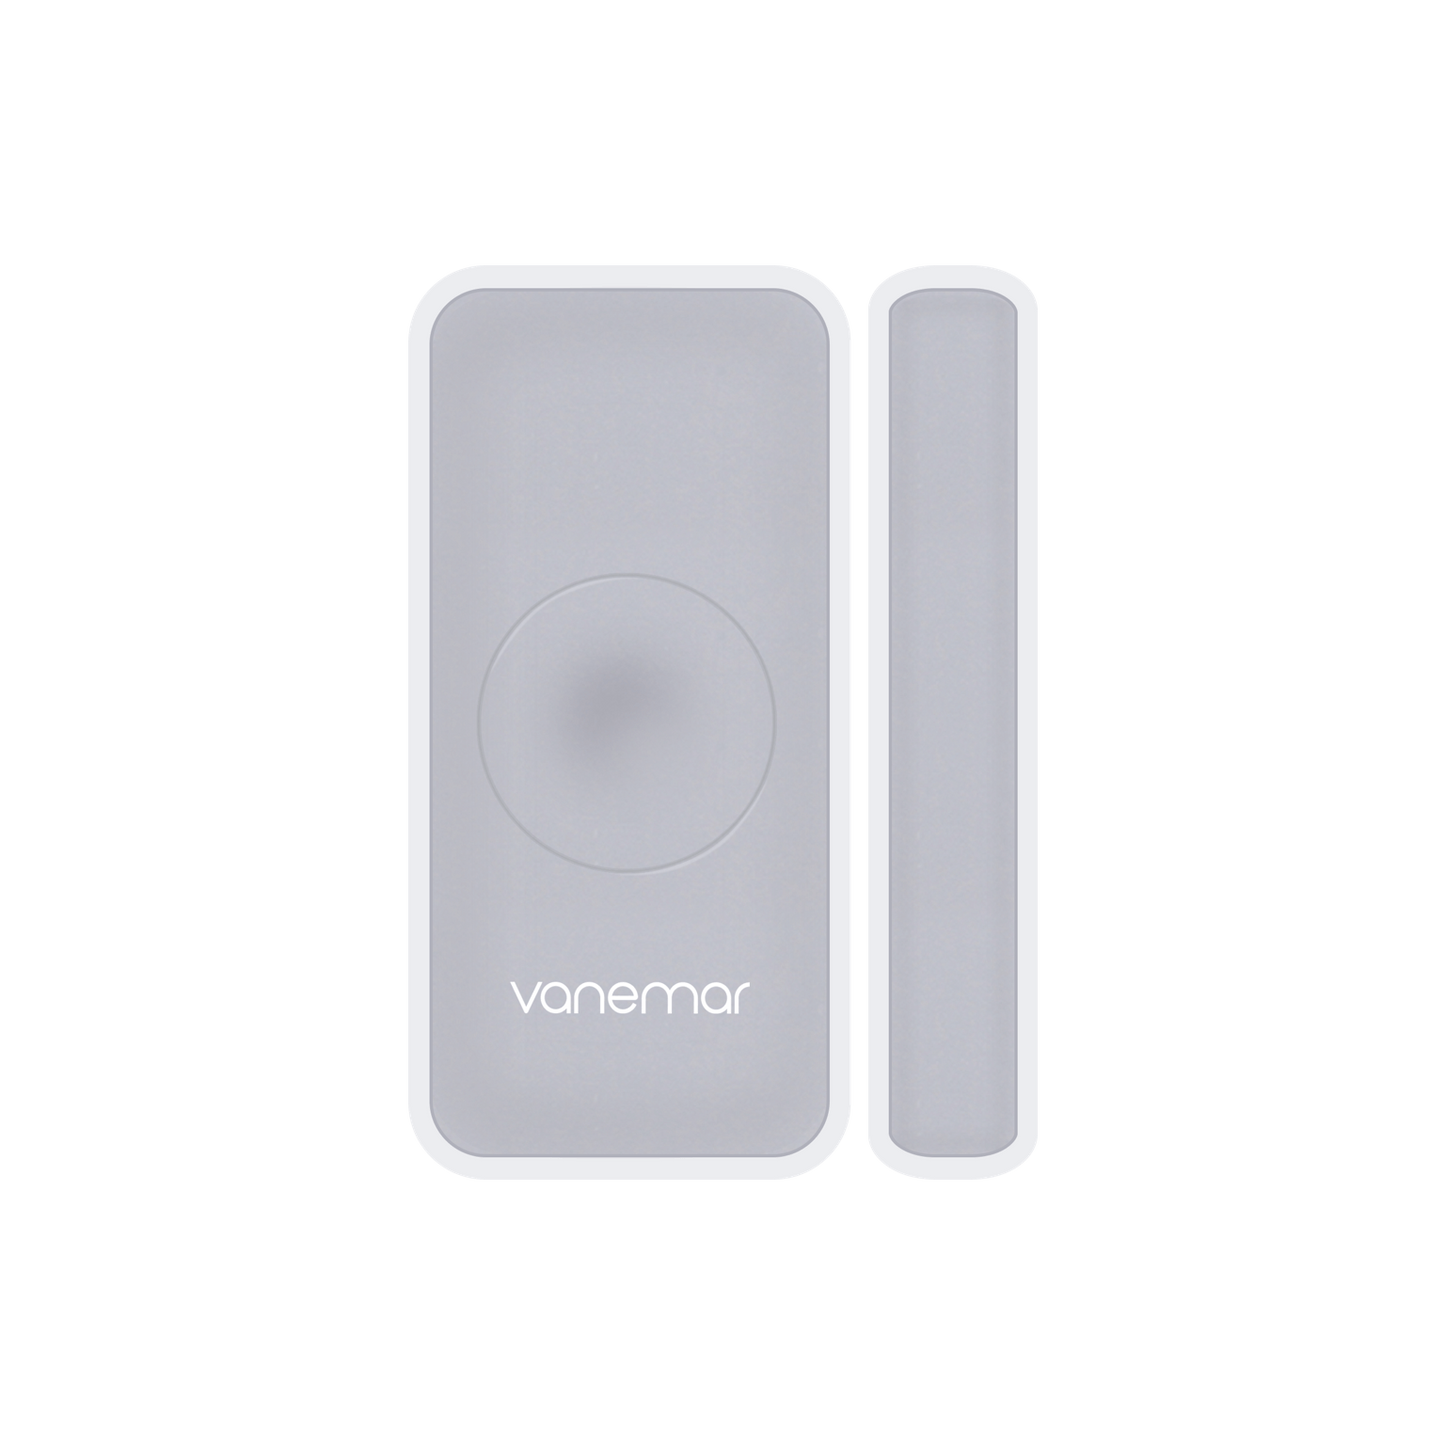 vanemar entry sensor image